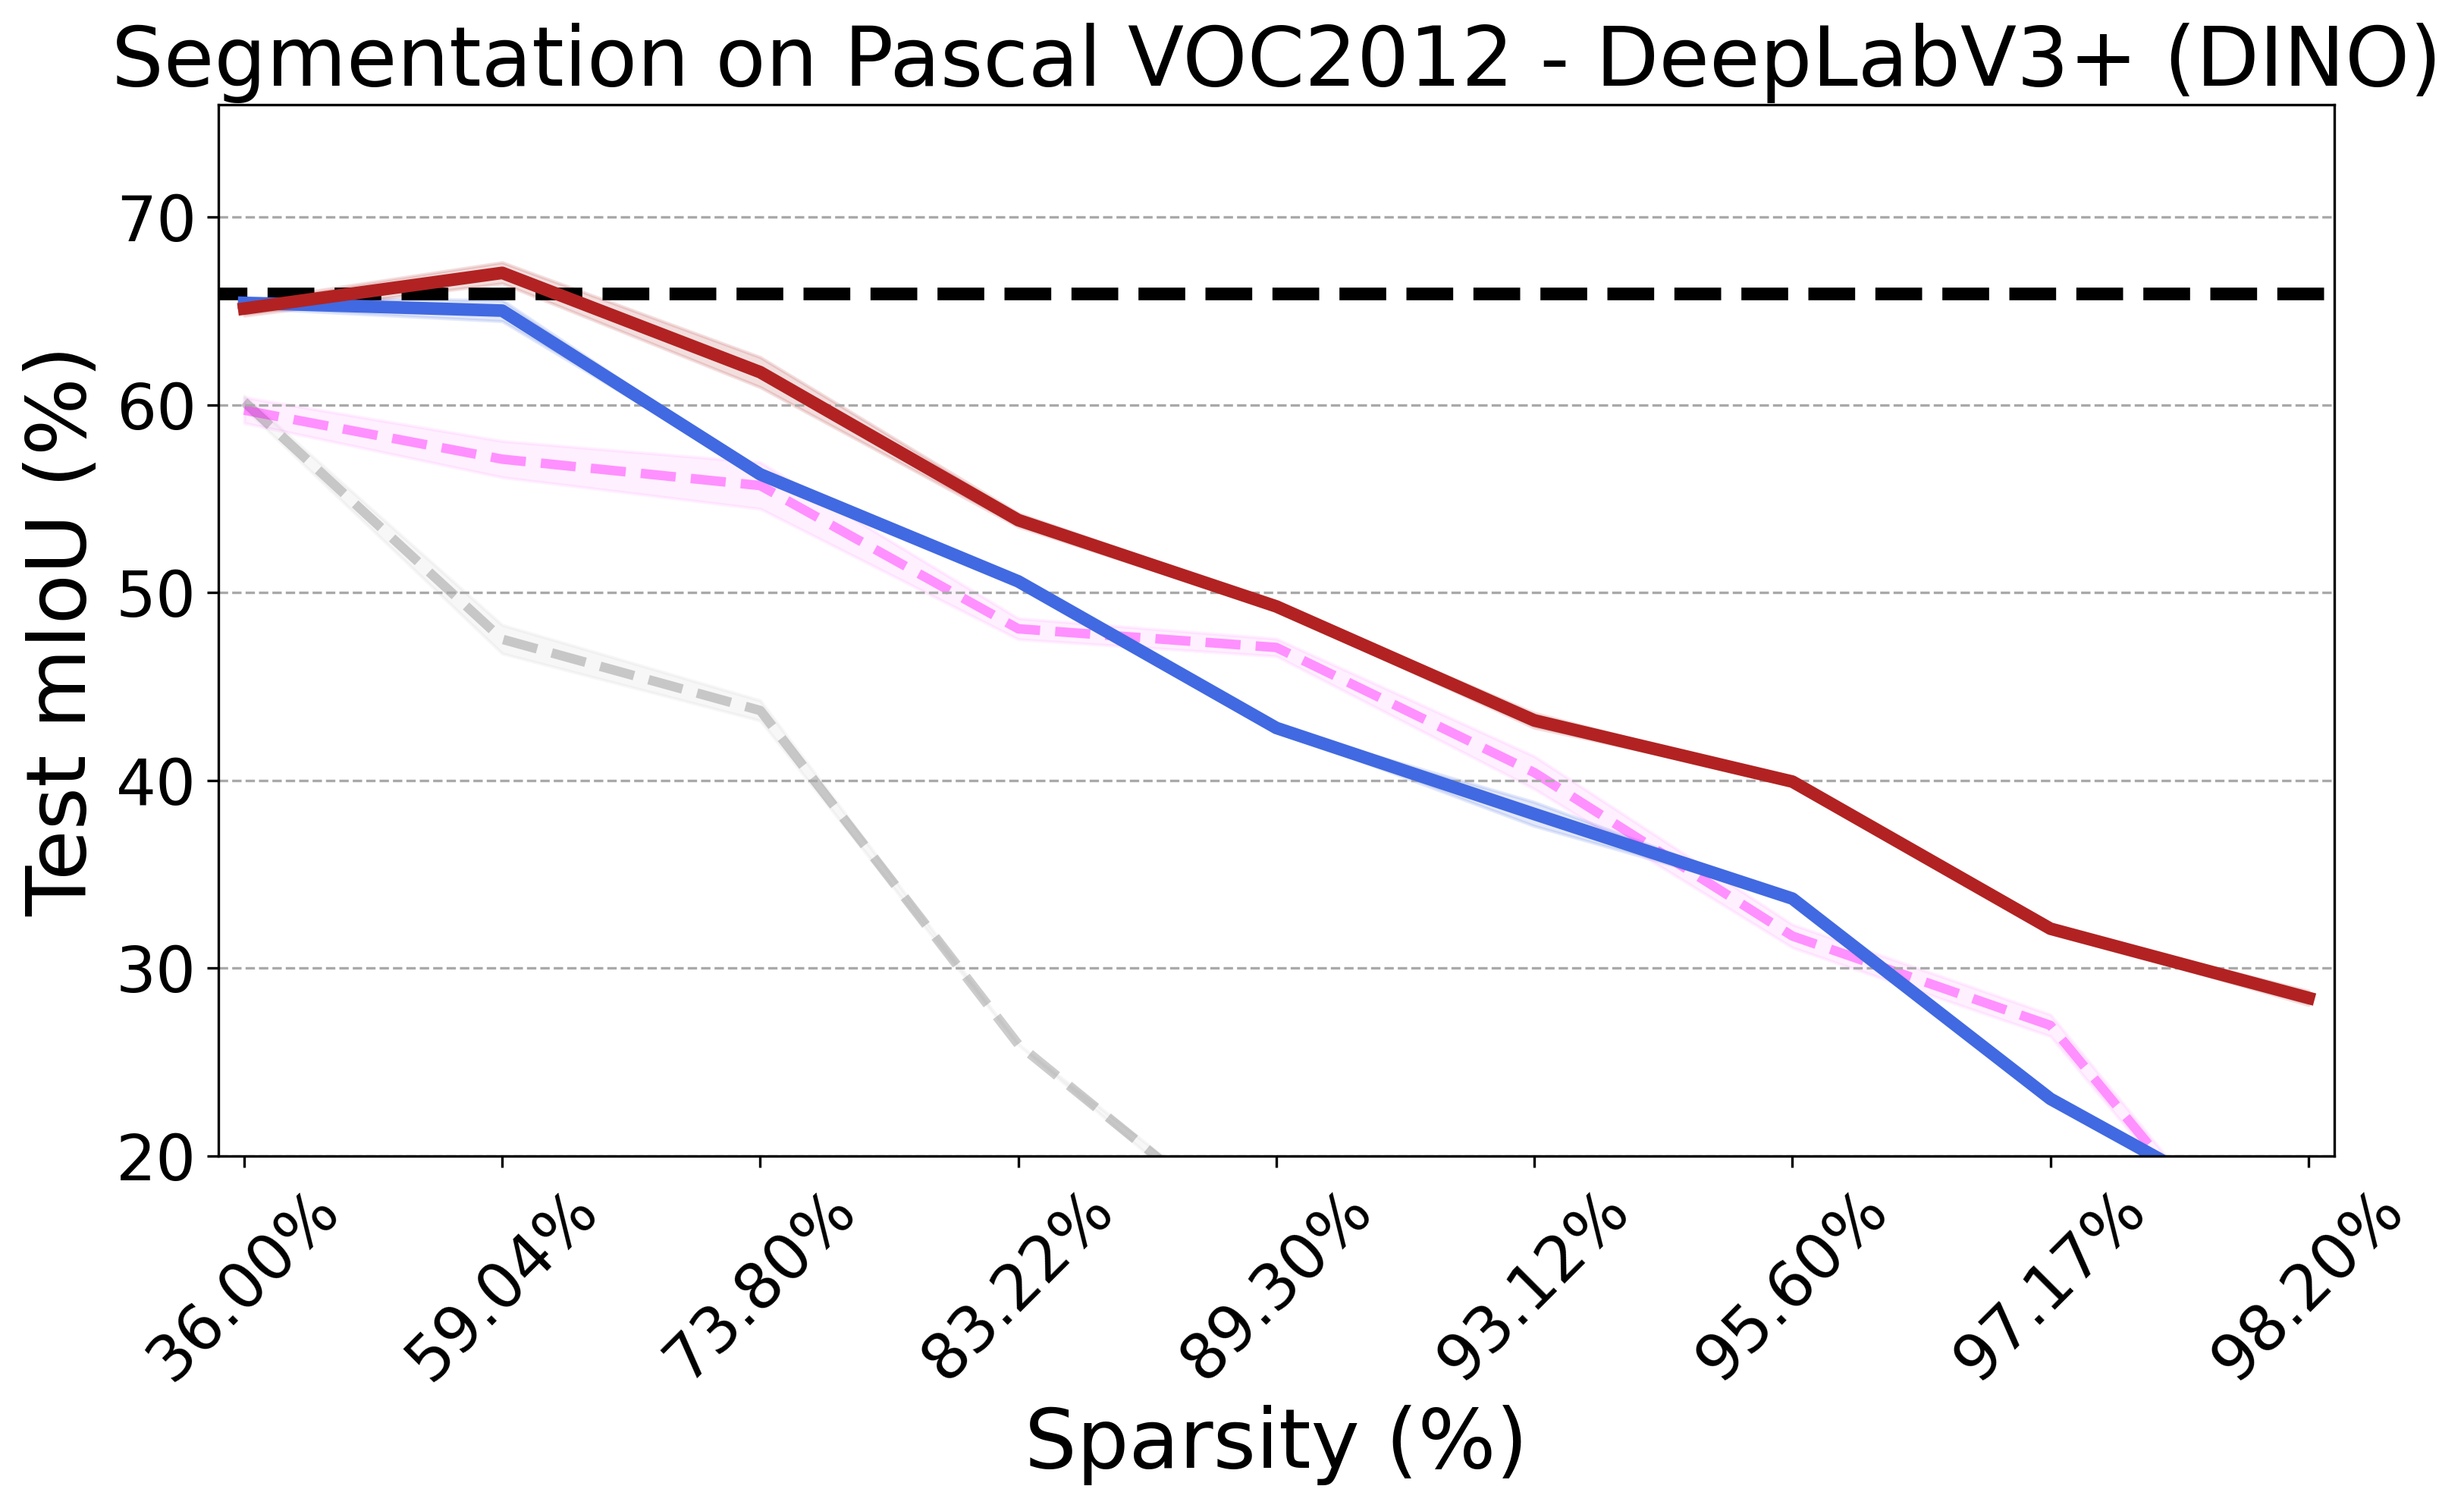 Path eXclusion (PX) on Pascal VOC 2012 - ResNet50 DeepLabV3+ DINO pretrain.